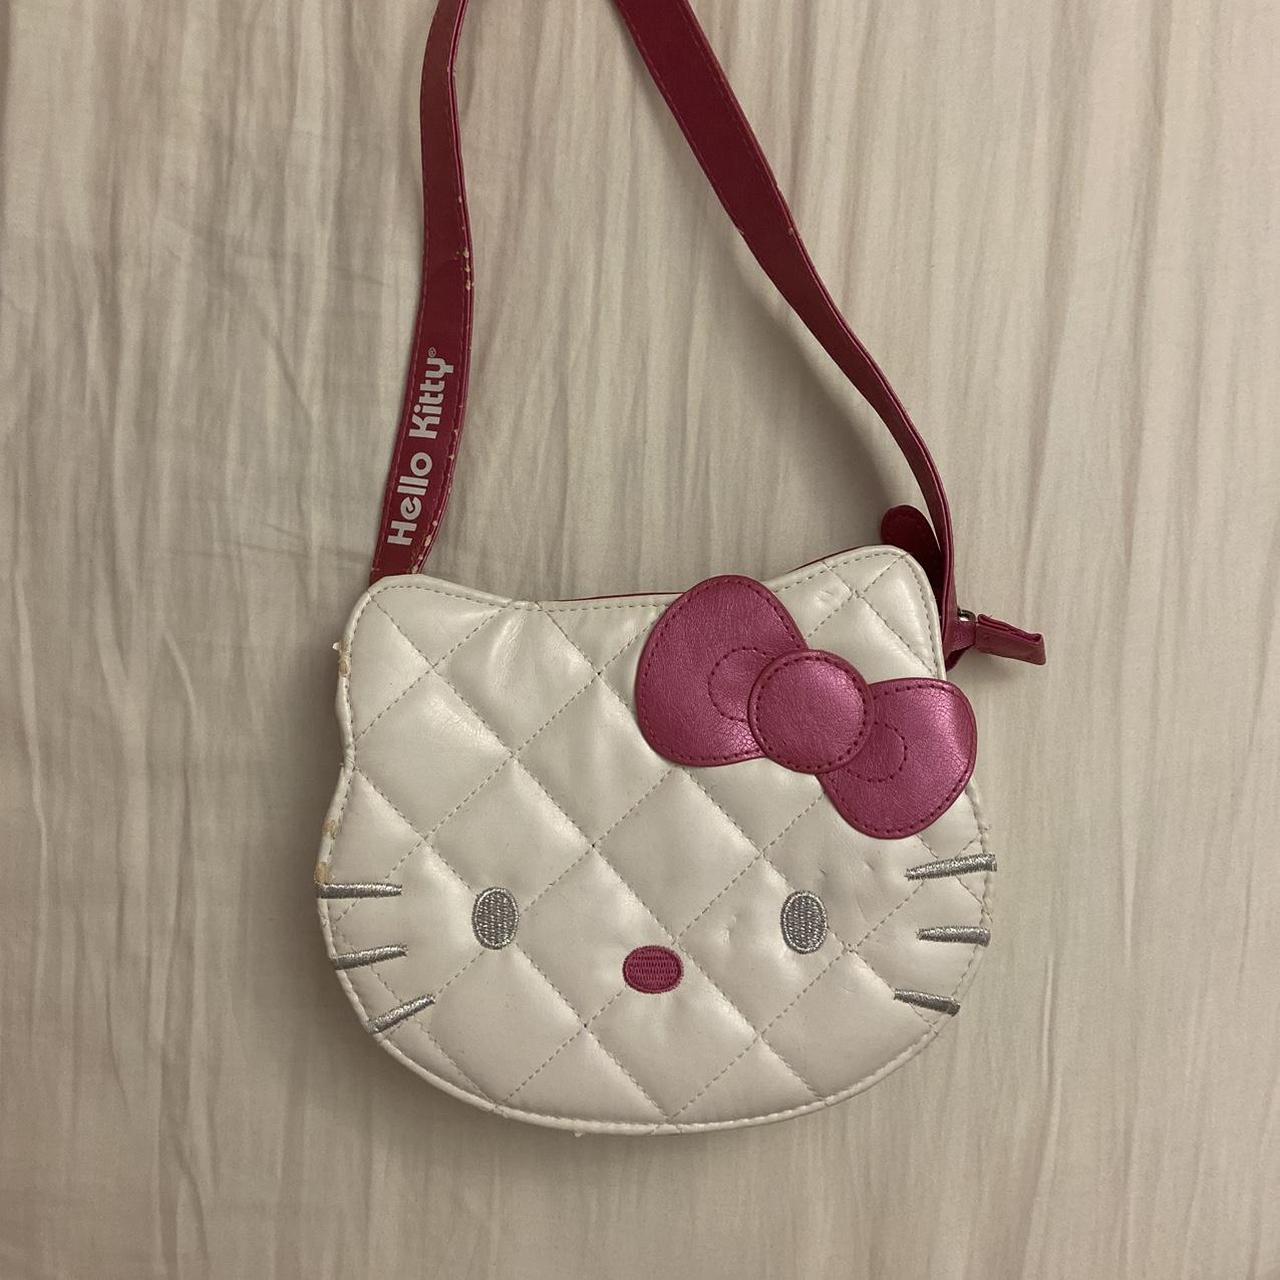 Hello Kitty purse, 8” x 5” x 2”, Licensed sanrio